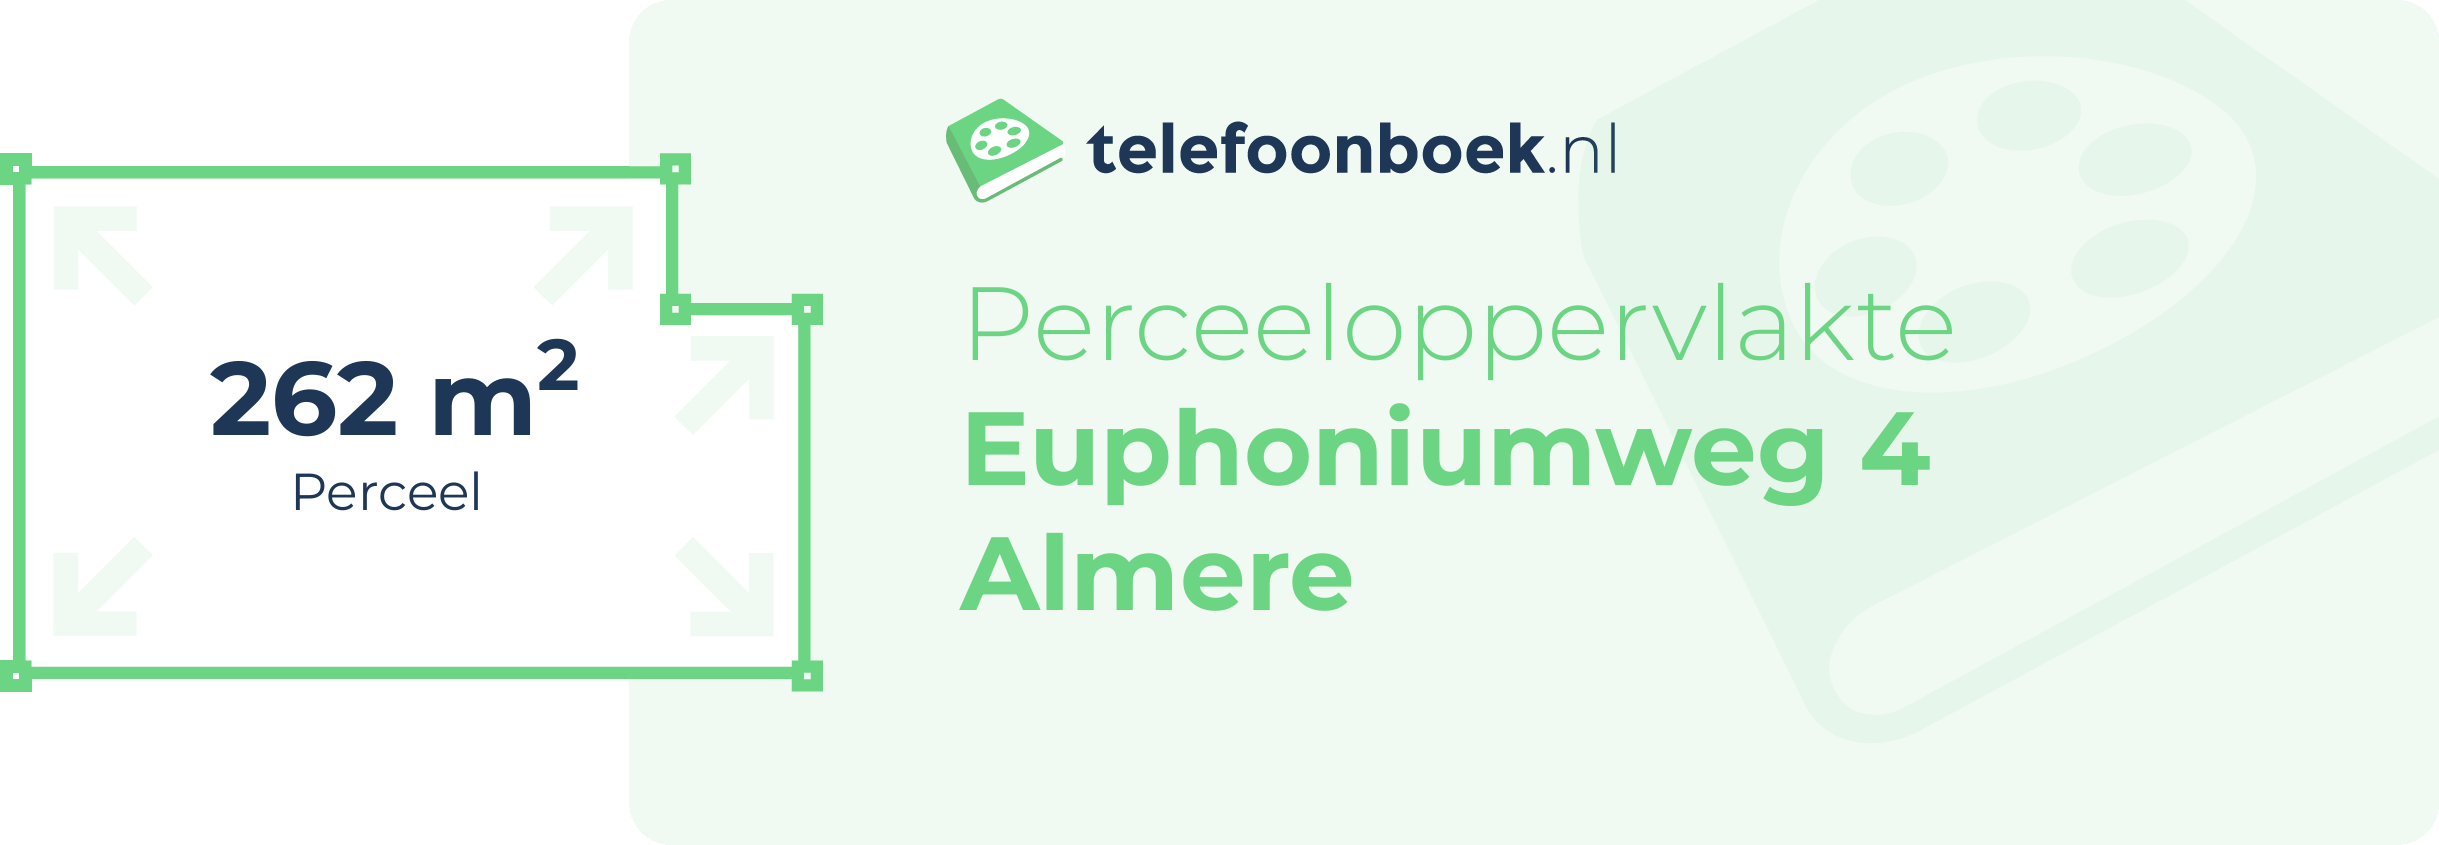 Perceeloppervlakte Euphoniumweg 4 Almere